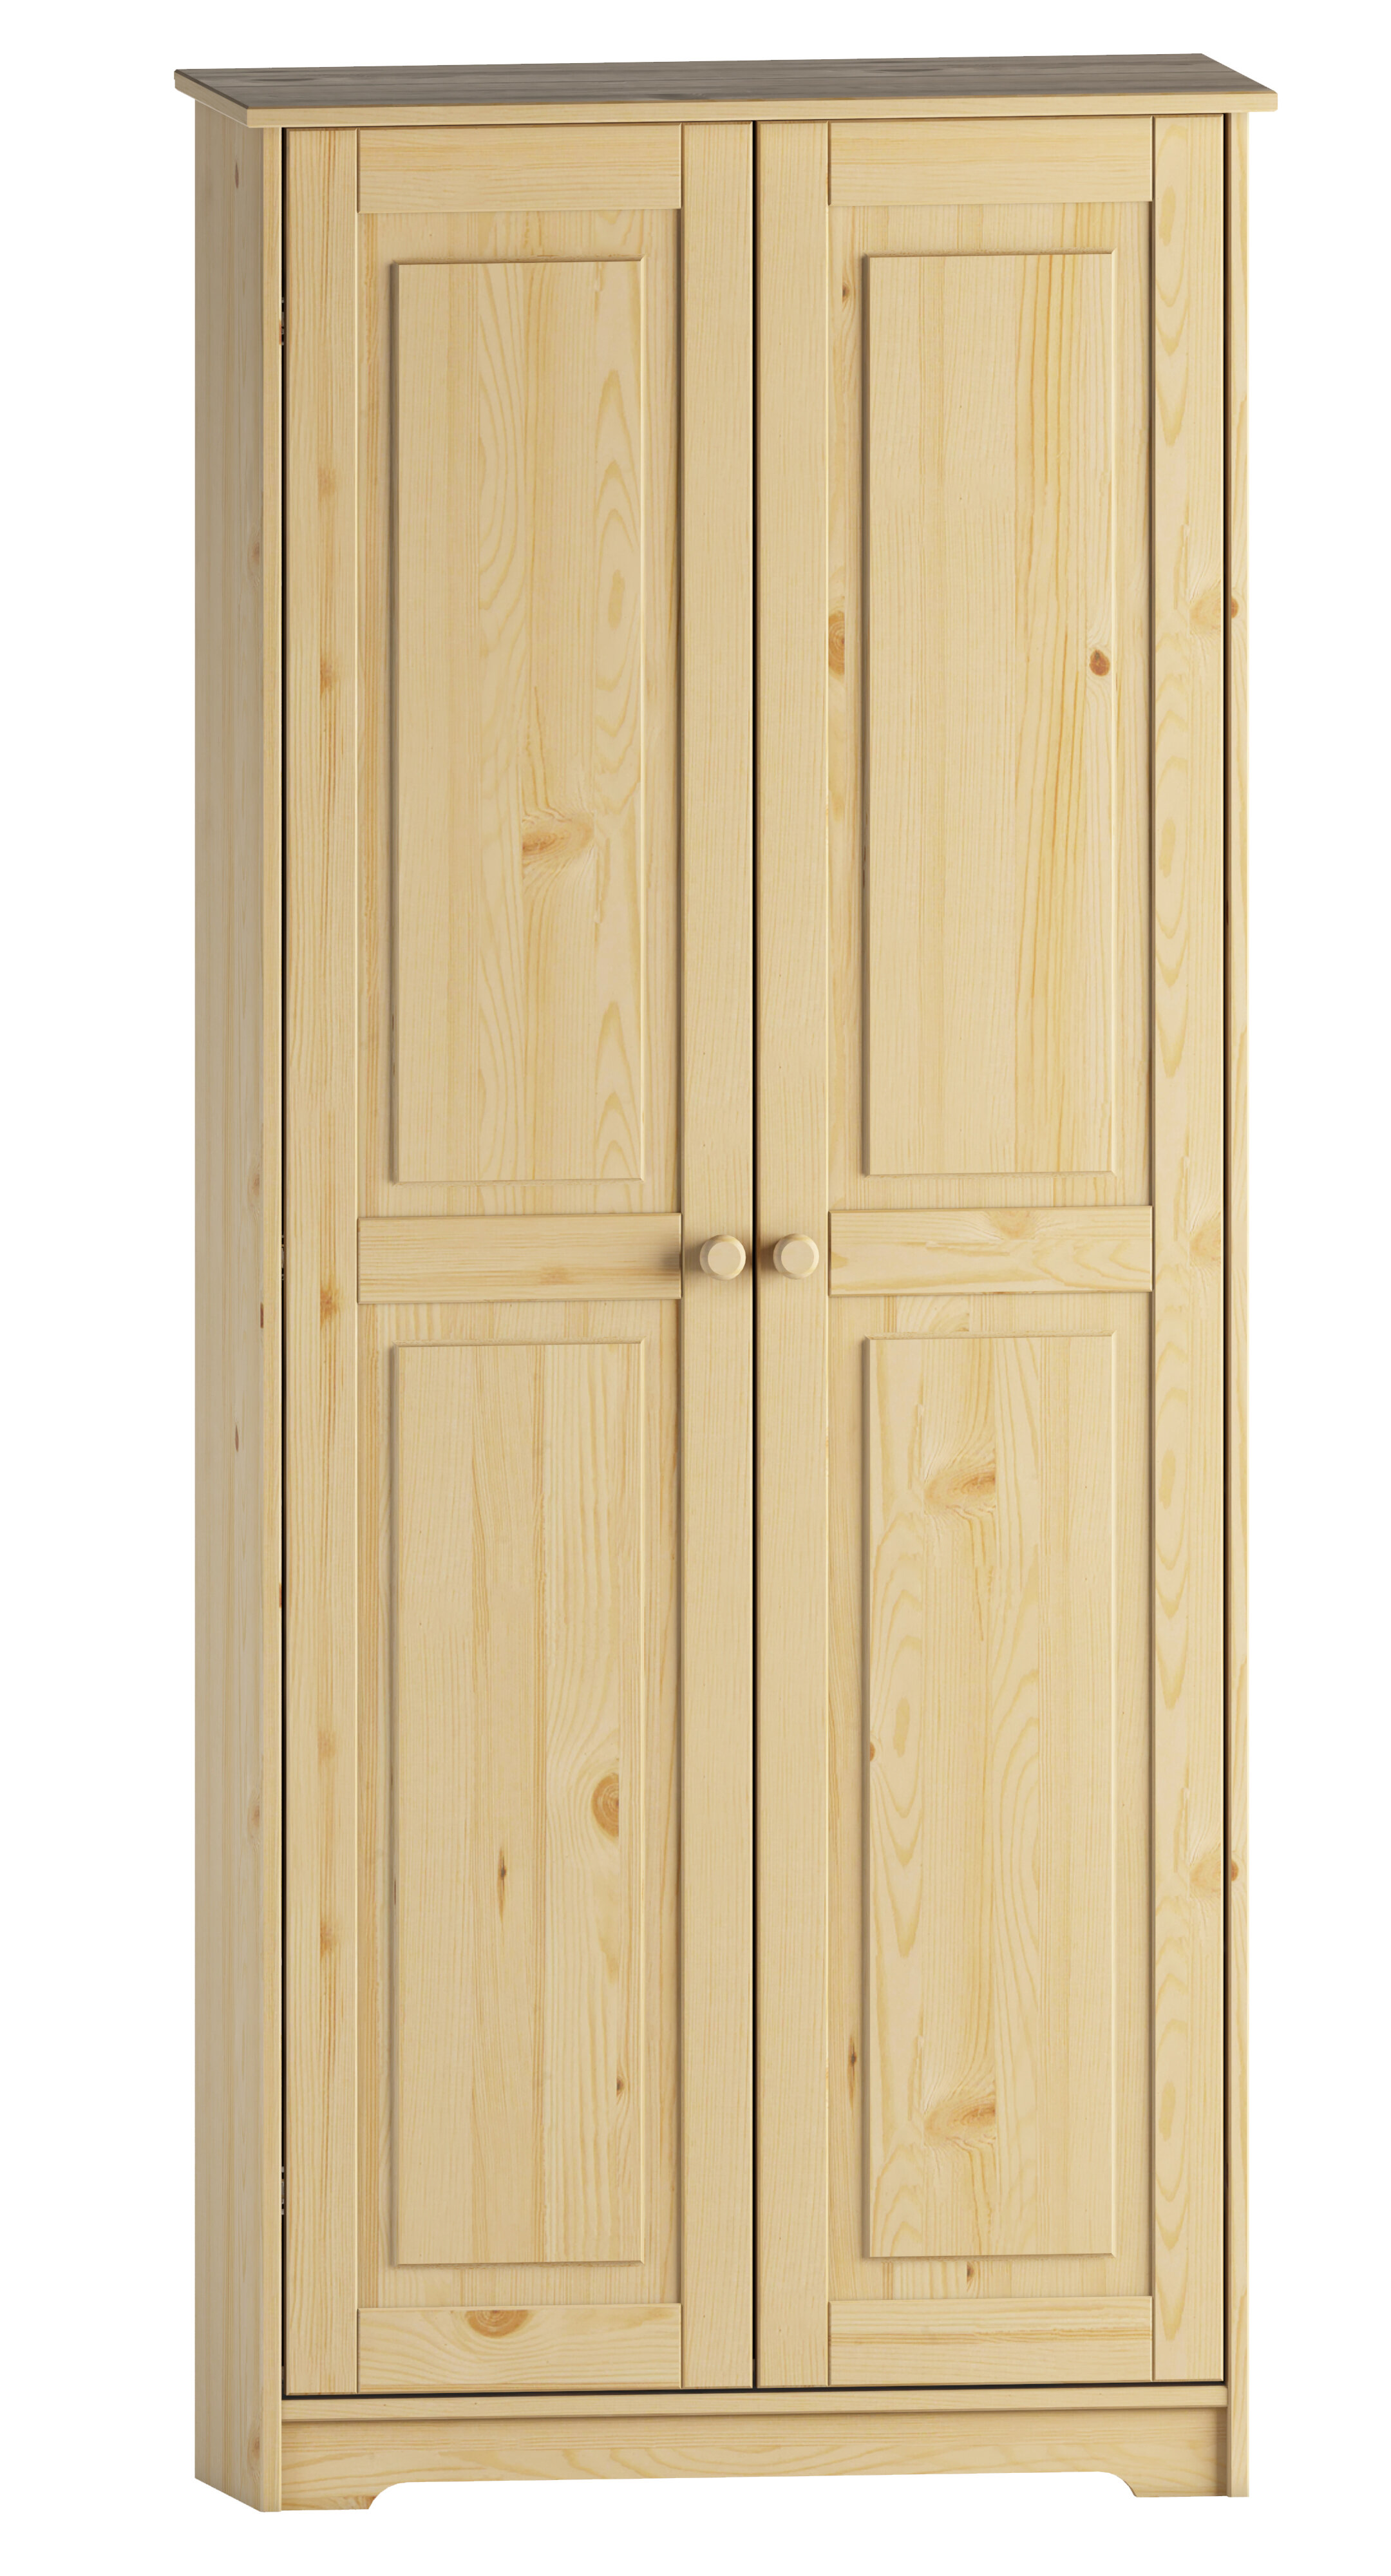 Furniture Kitchen Decorating Plain Pine Cabinet Doors Unfinished